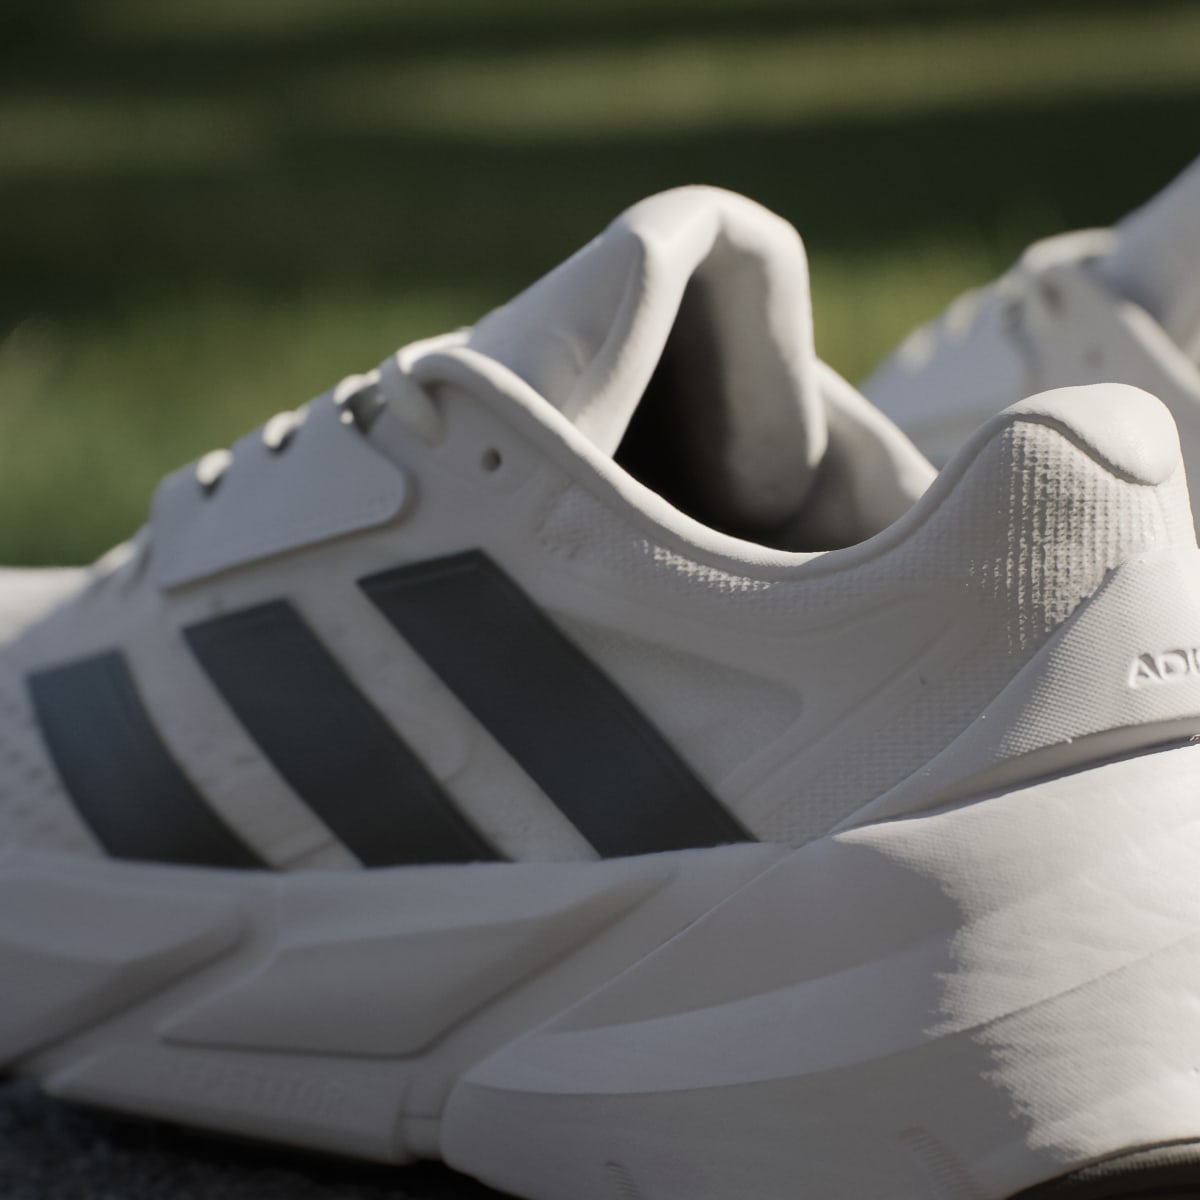 Adidas Scarpe adistar 2.0. 8